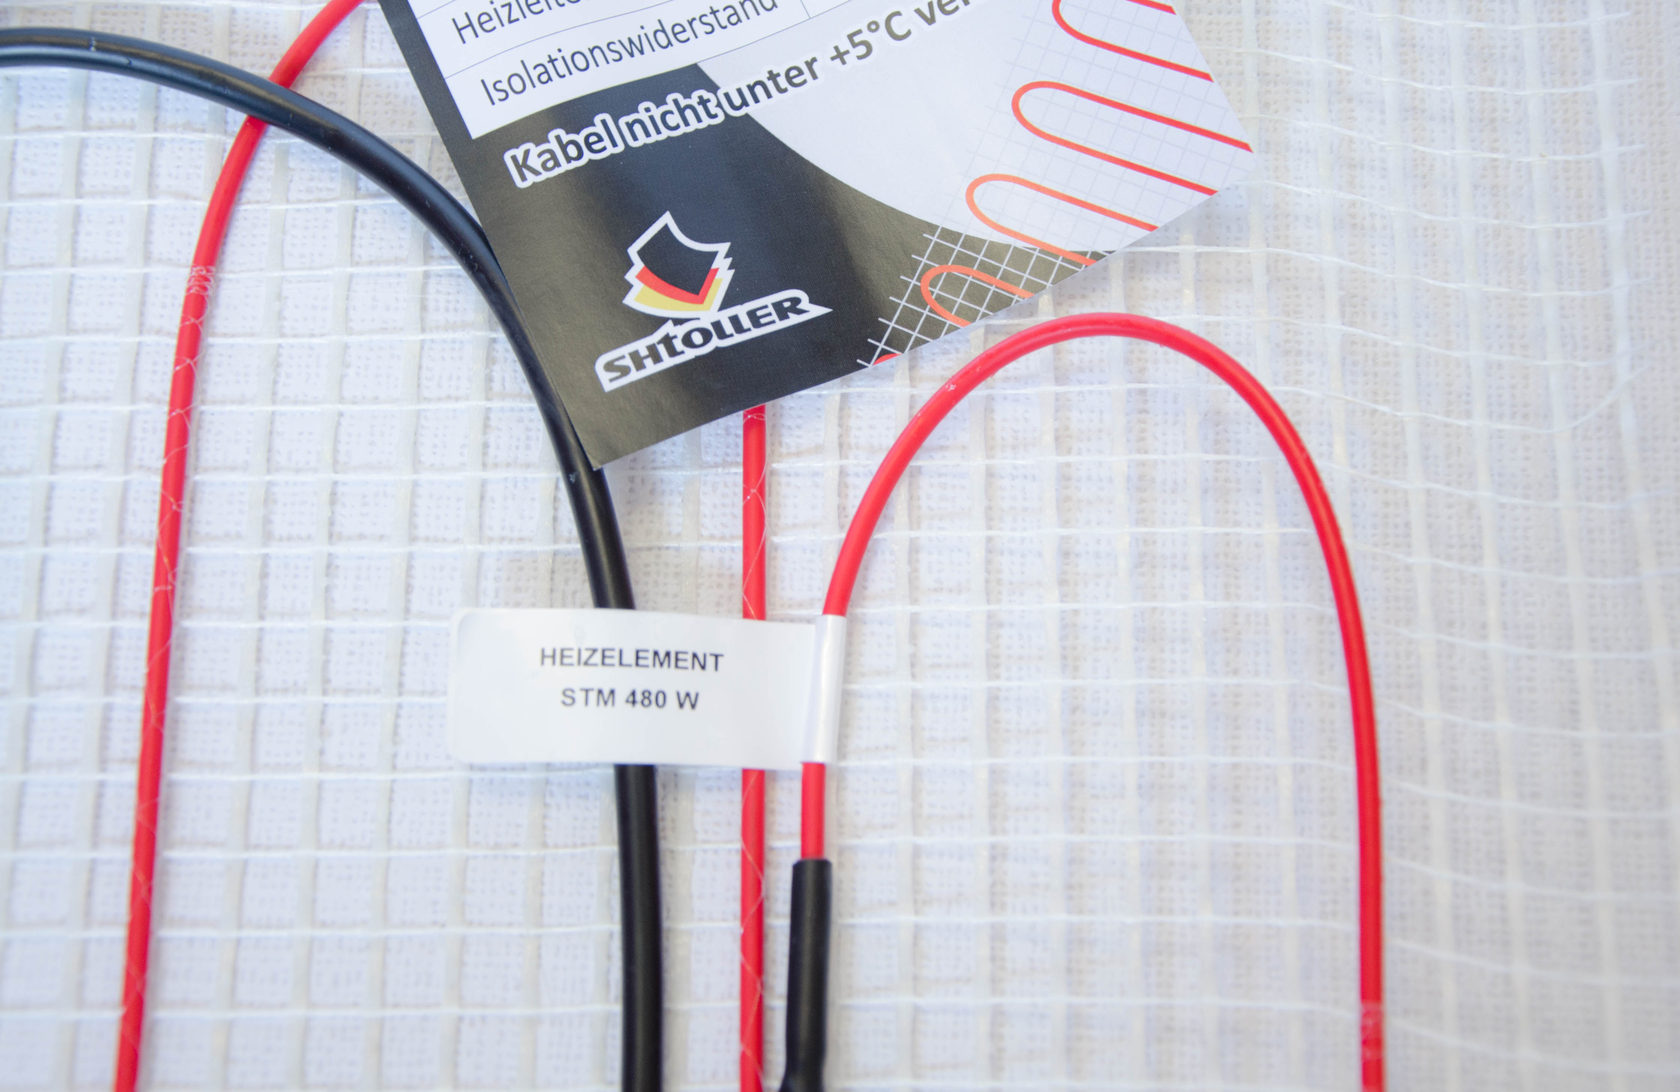 Электрический теплый пол Shtoller STM 480W цена 0 грн - фотография 2